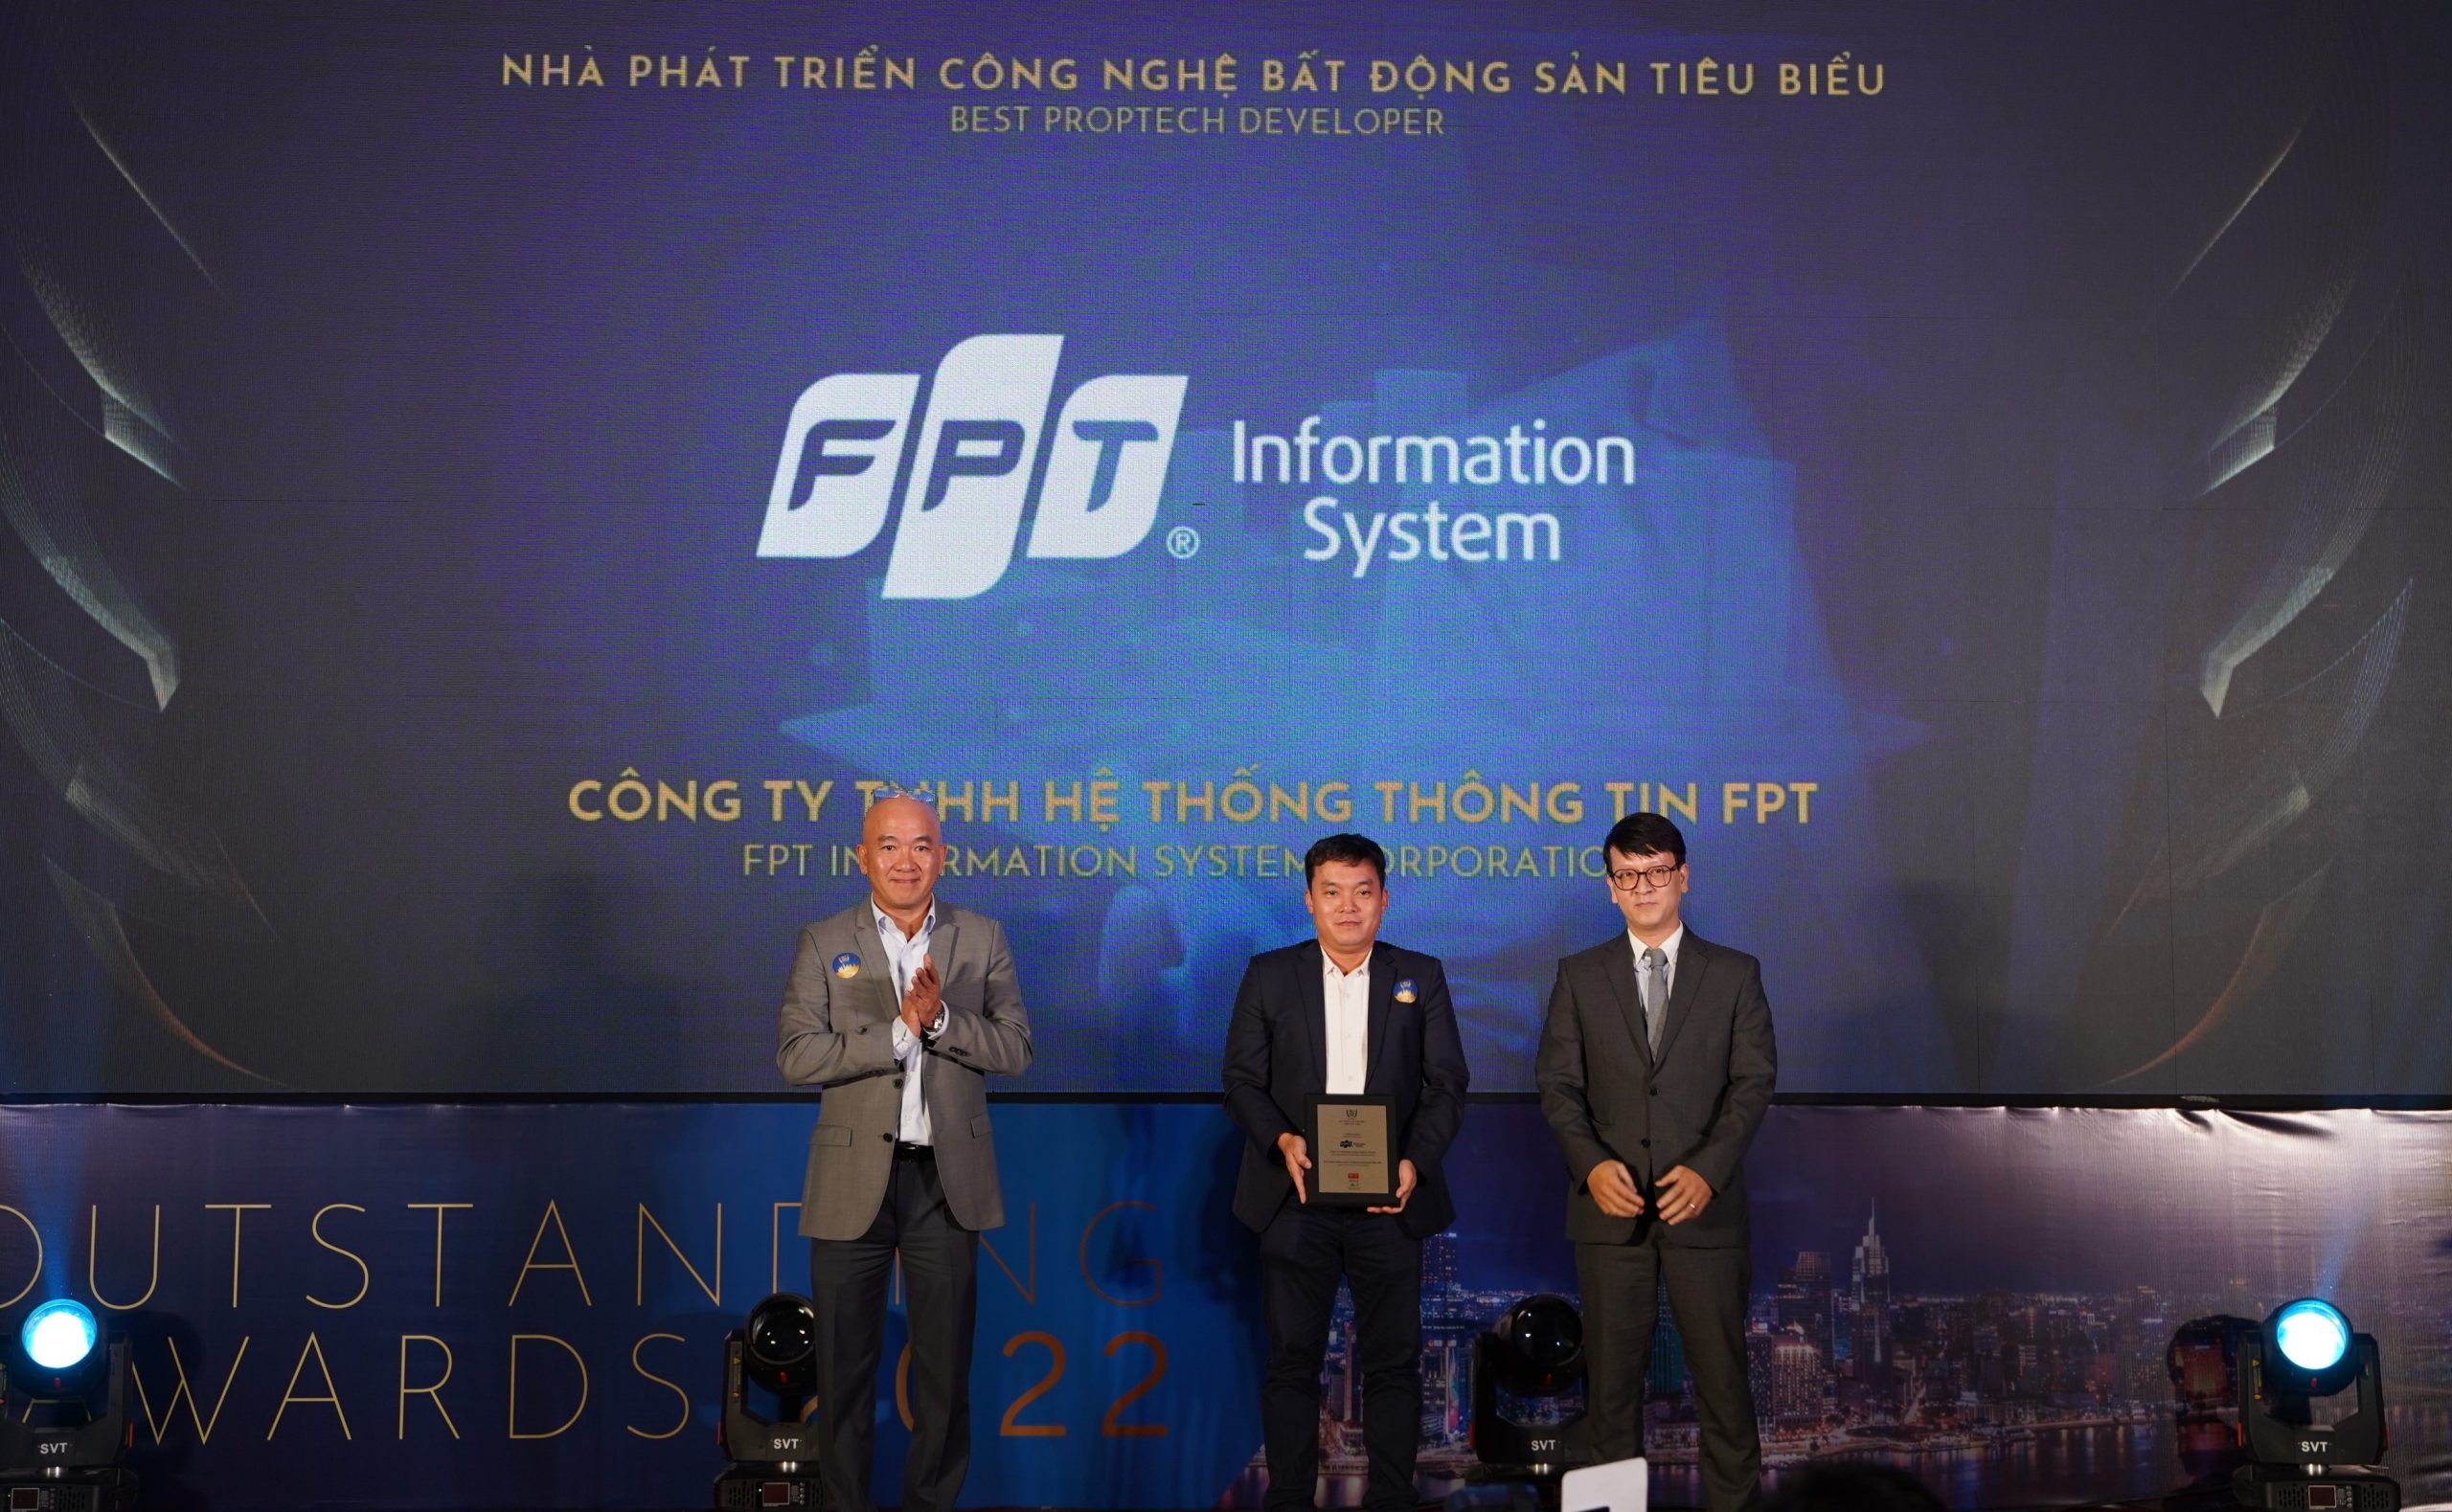 2022 Vietnam Outstanding Property Awards – Best PropTech Developer category